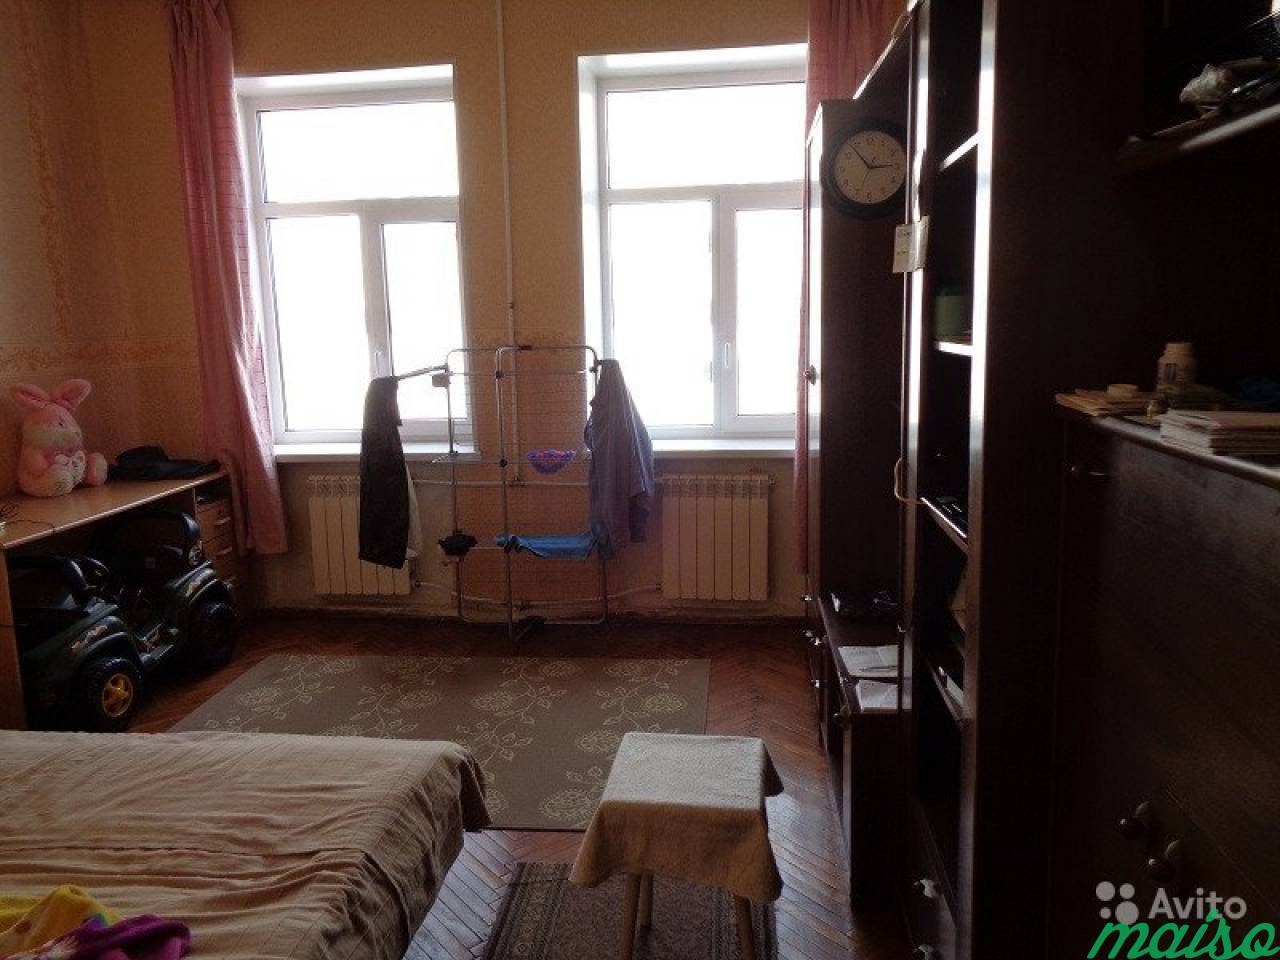 Комната 24 м² в 3-к, 5/5 эт. в Санкт-Петербурге. Фото 2